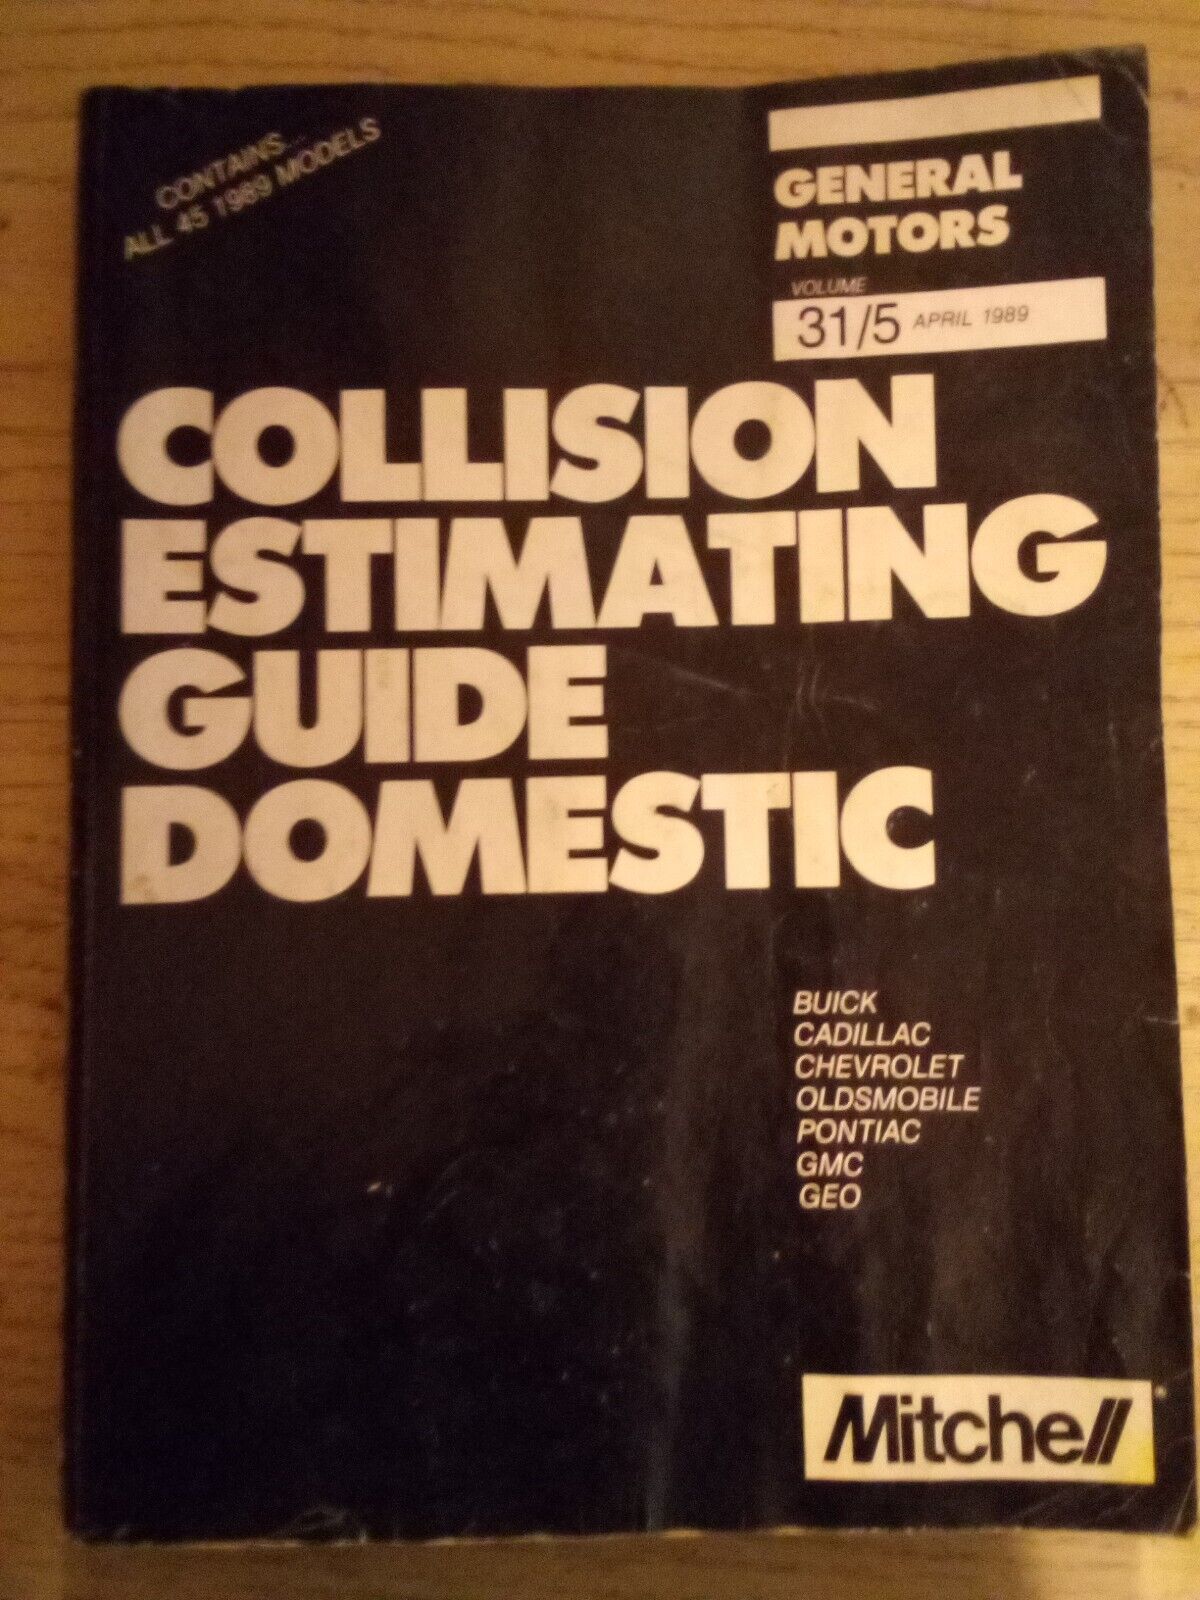 Mitchell Collision Estimating Guide Volume 31/5 General Motors April 1989